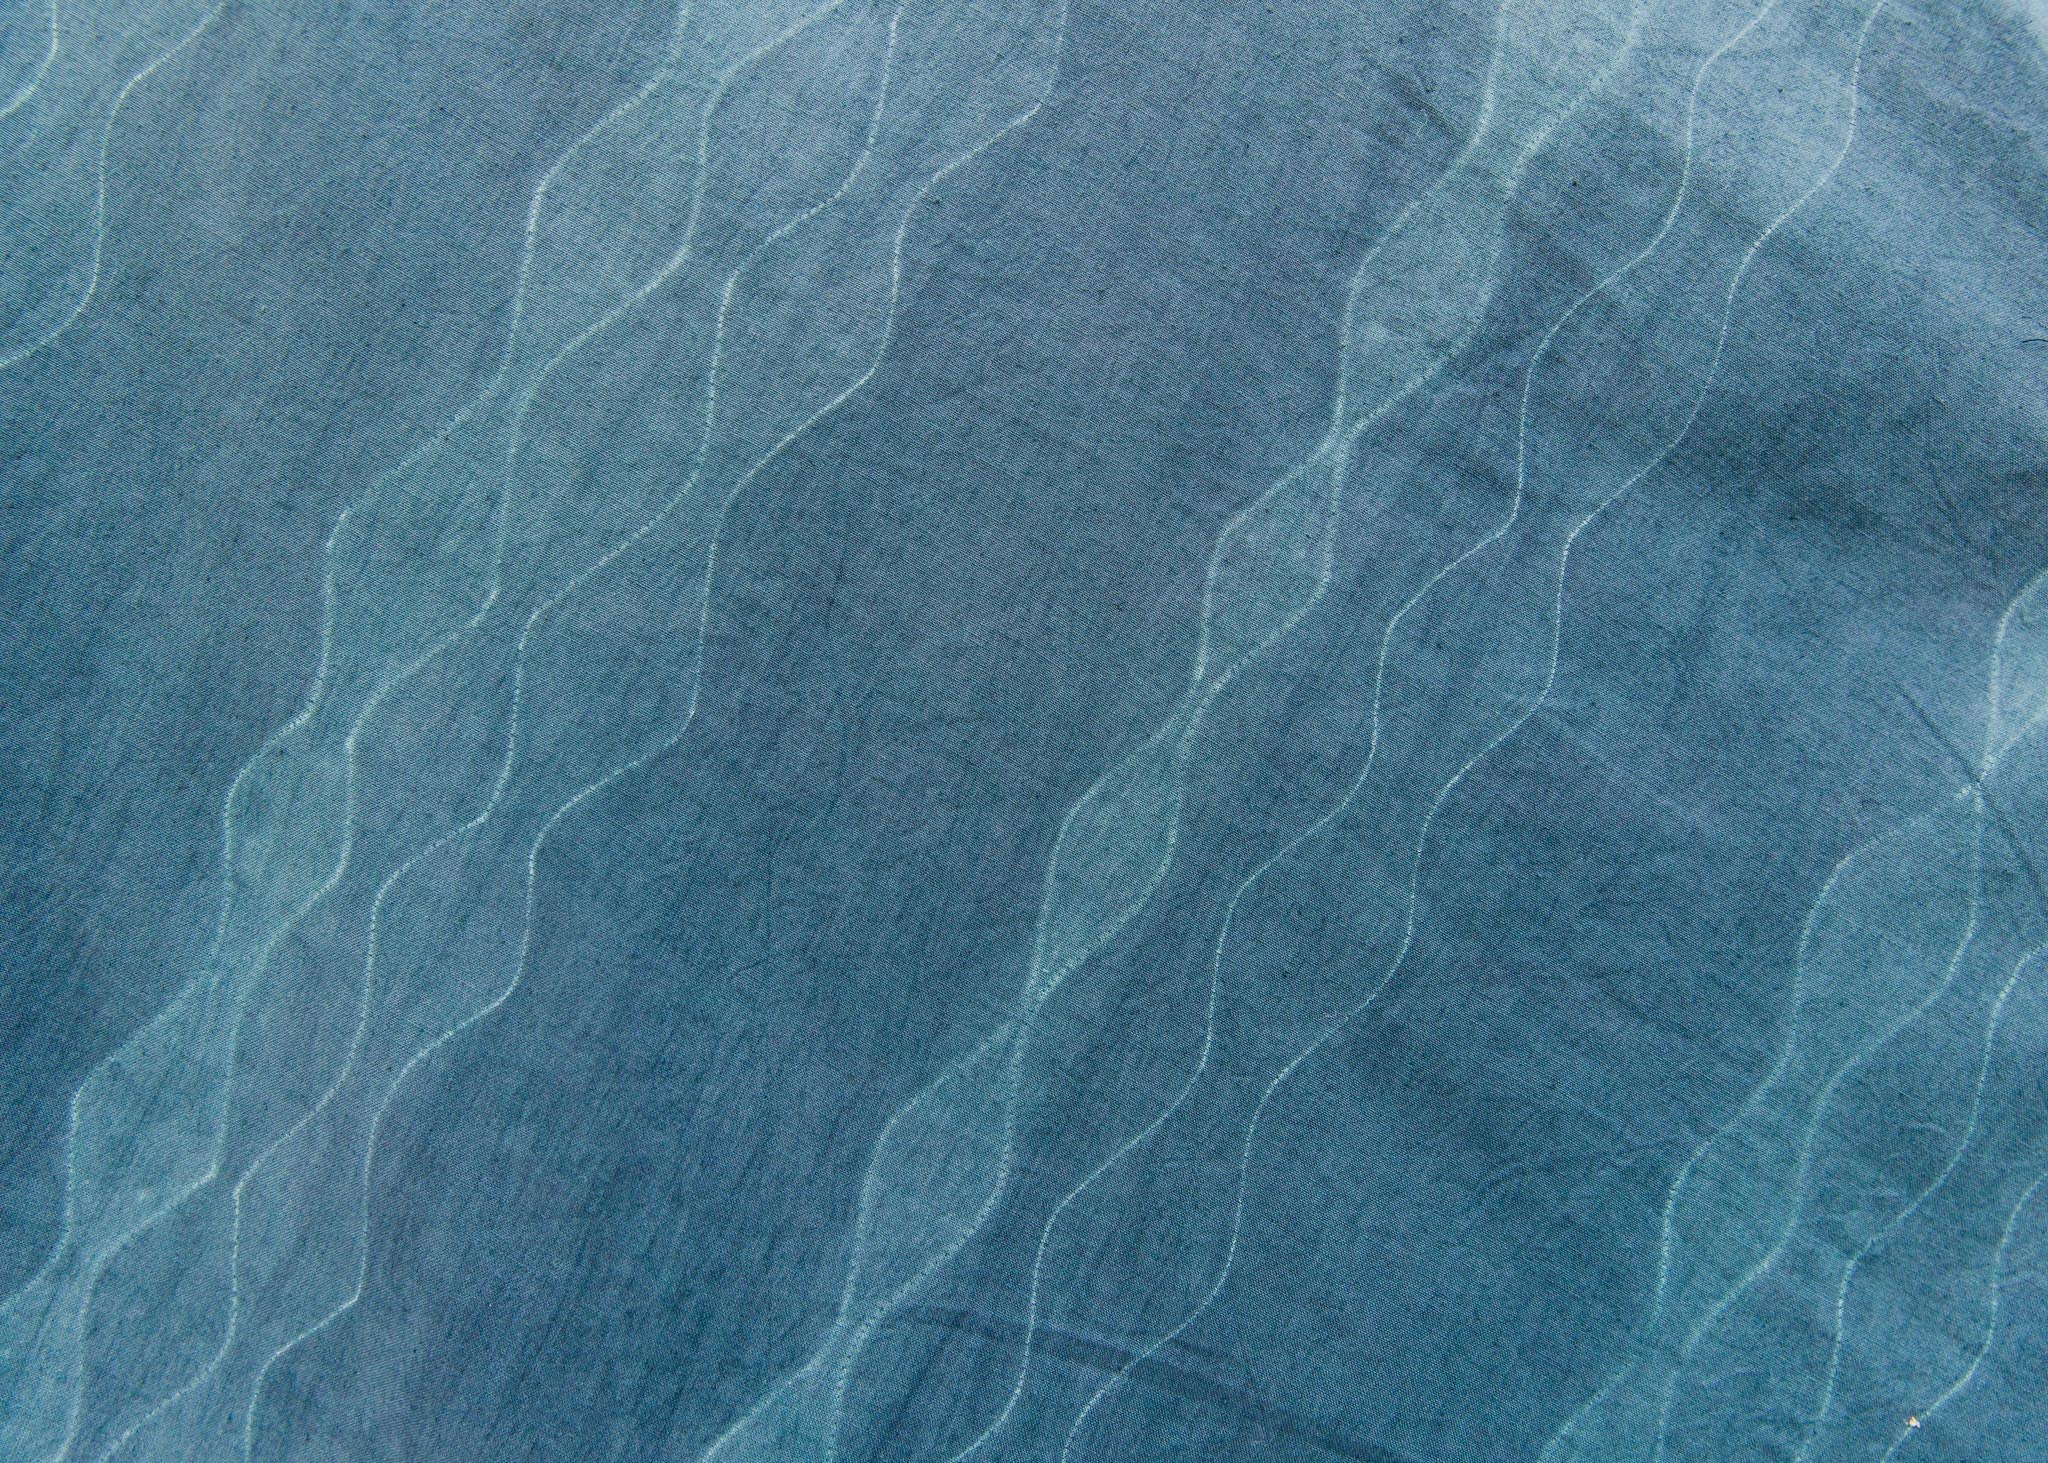 Stitch resist dyed fabric